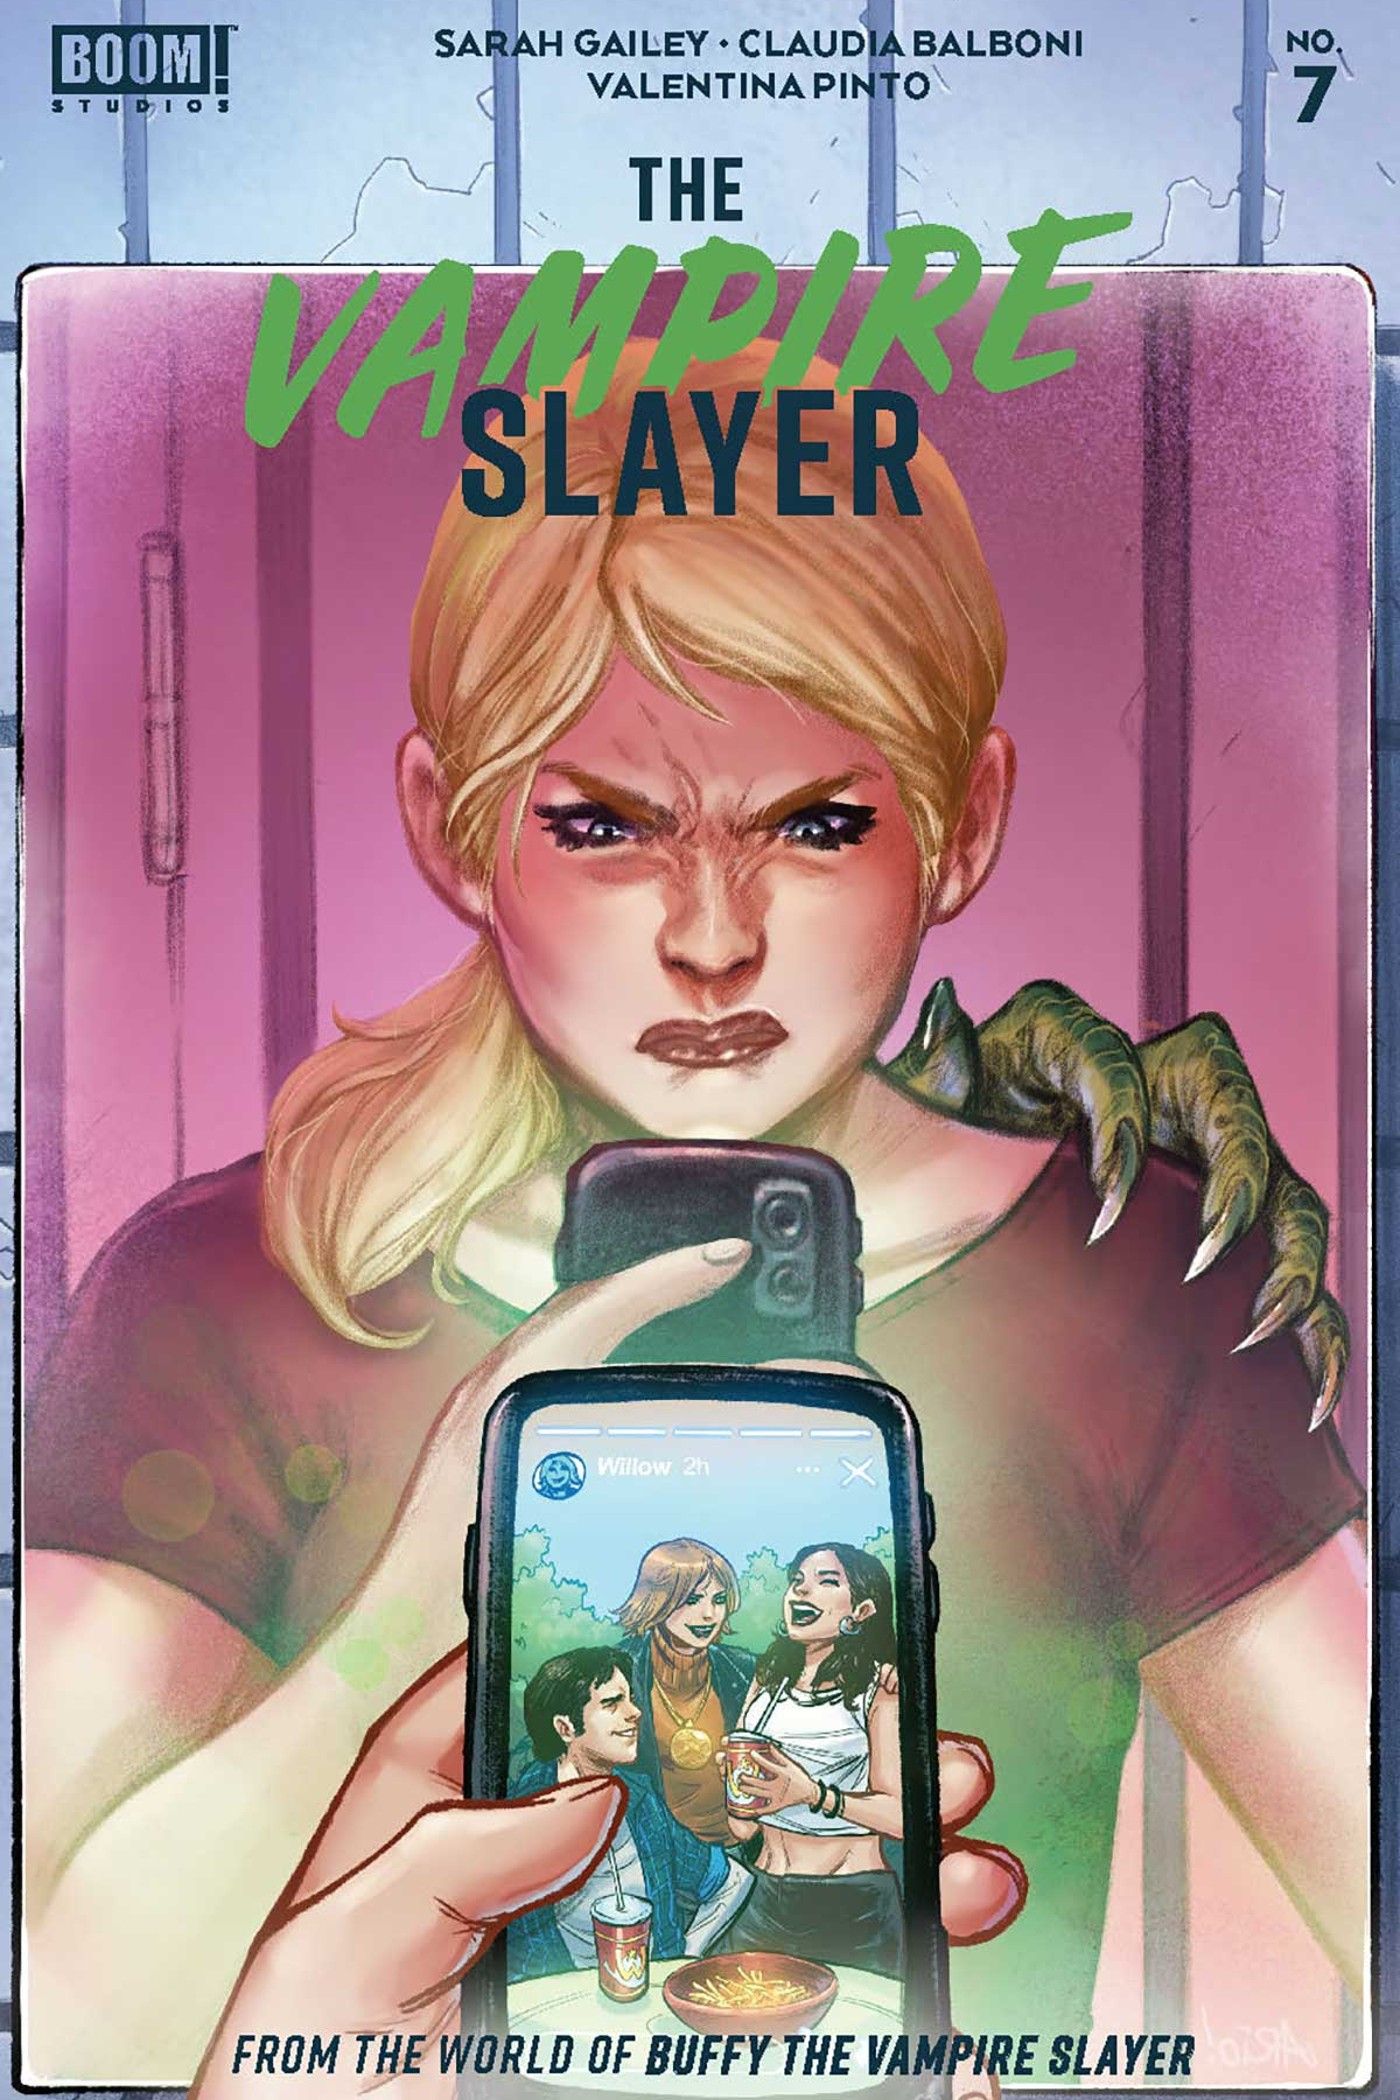 The Vampire Slayer #7 by Sarah Gailey (Buffy)